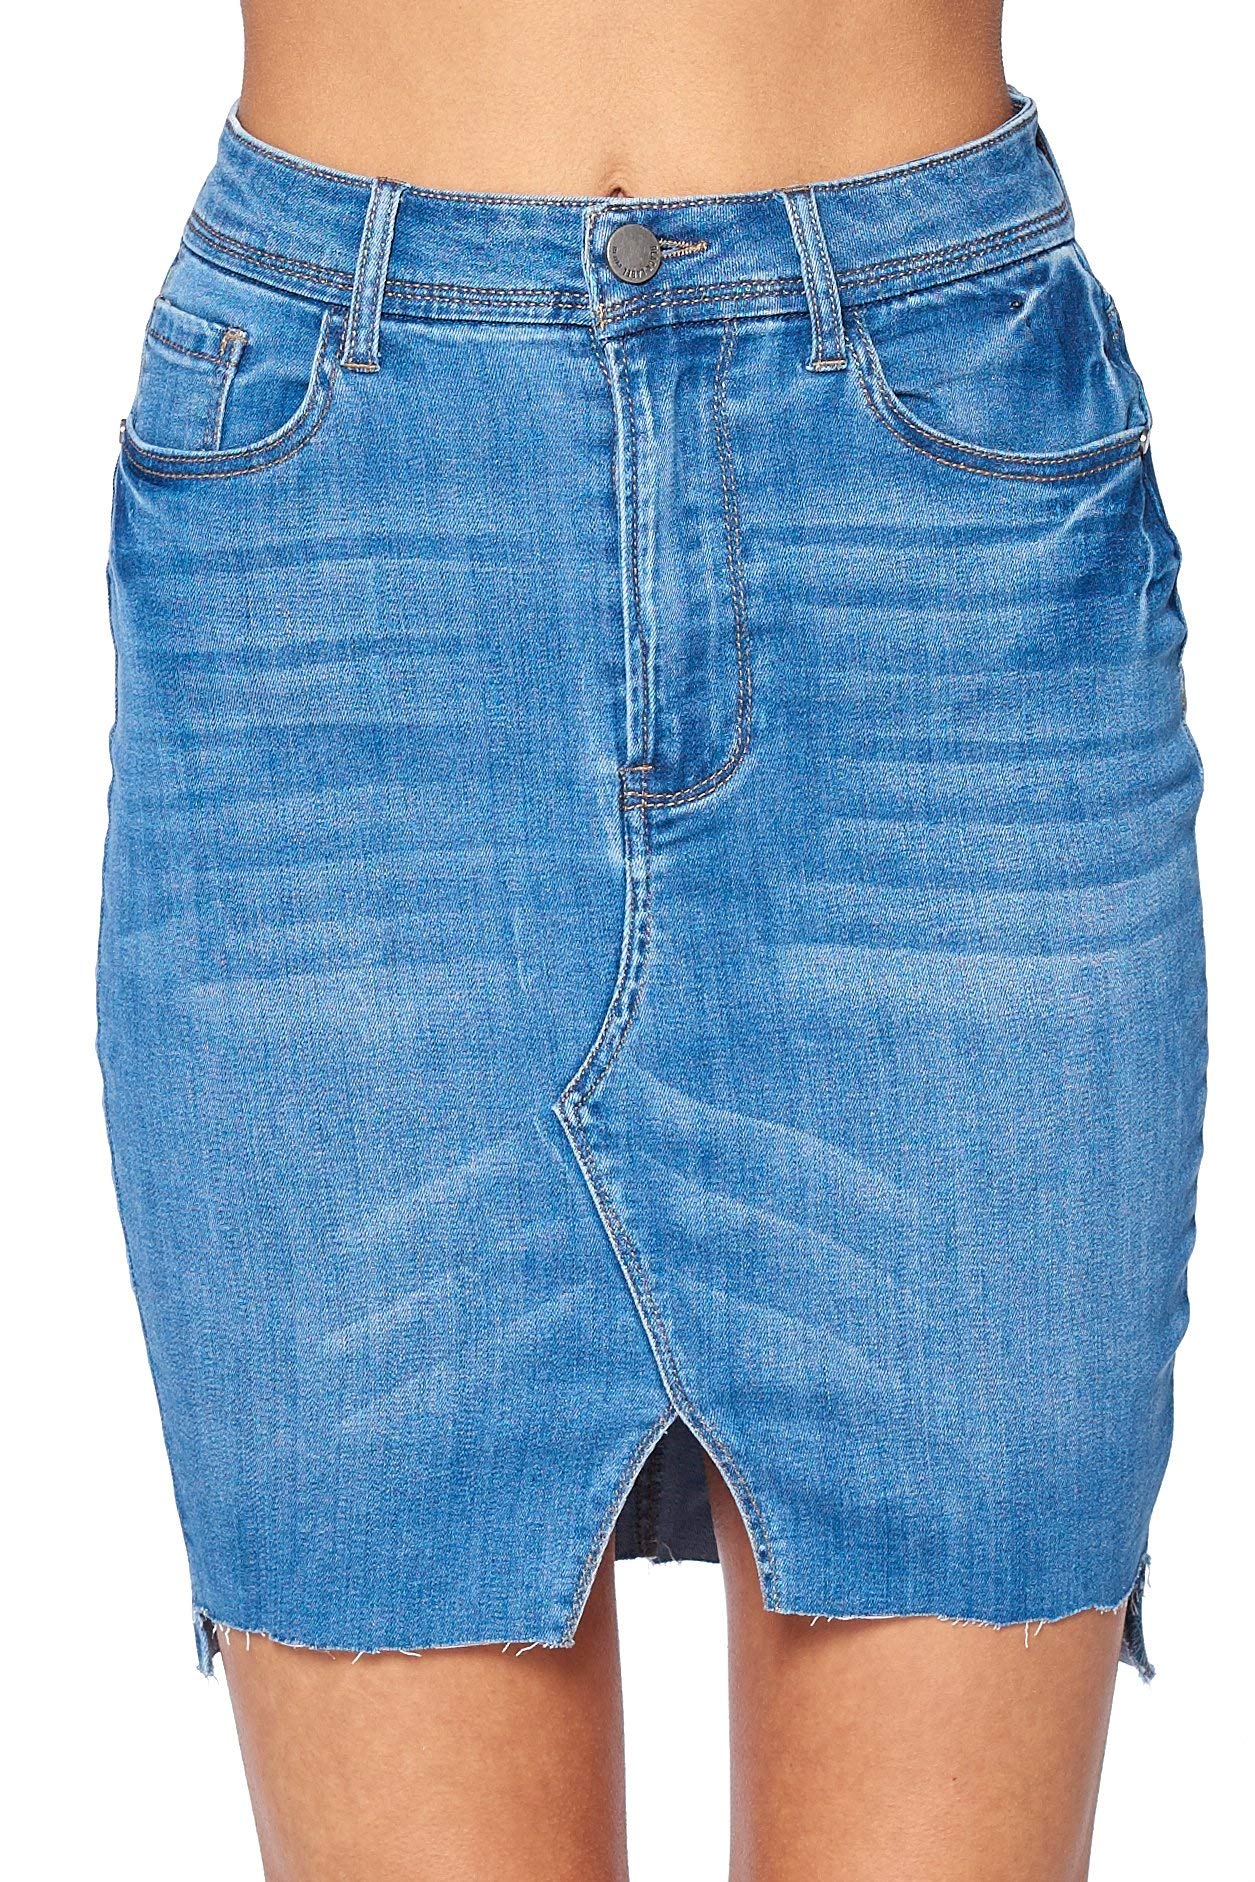 Khanomak Women's High Waist 5 Pocket Asymmetrical Raw Cut Hem Denim Mini Skirt